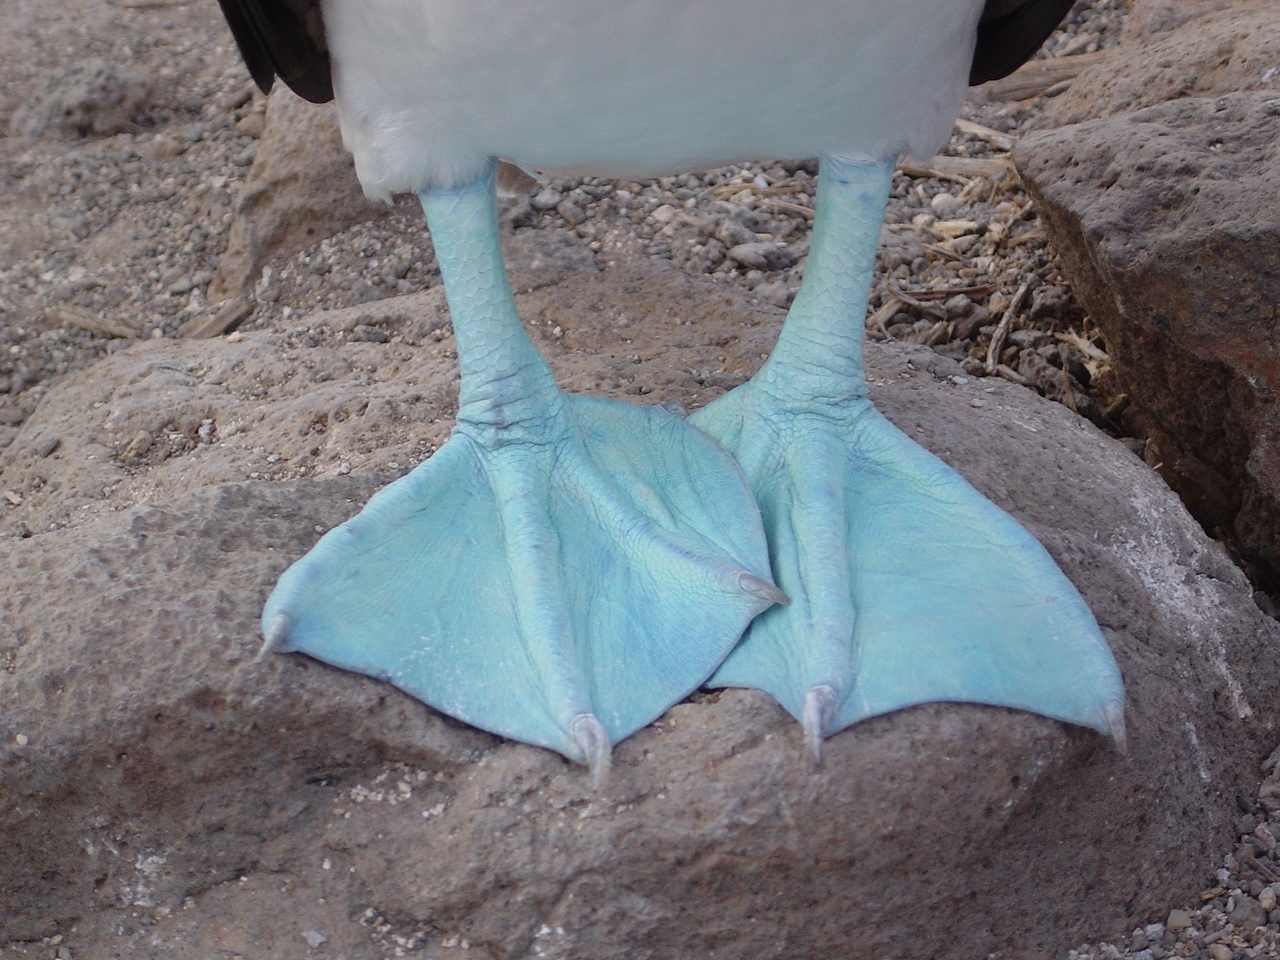 Galapagos Islands-Blue Footed Booby feet